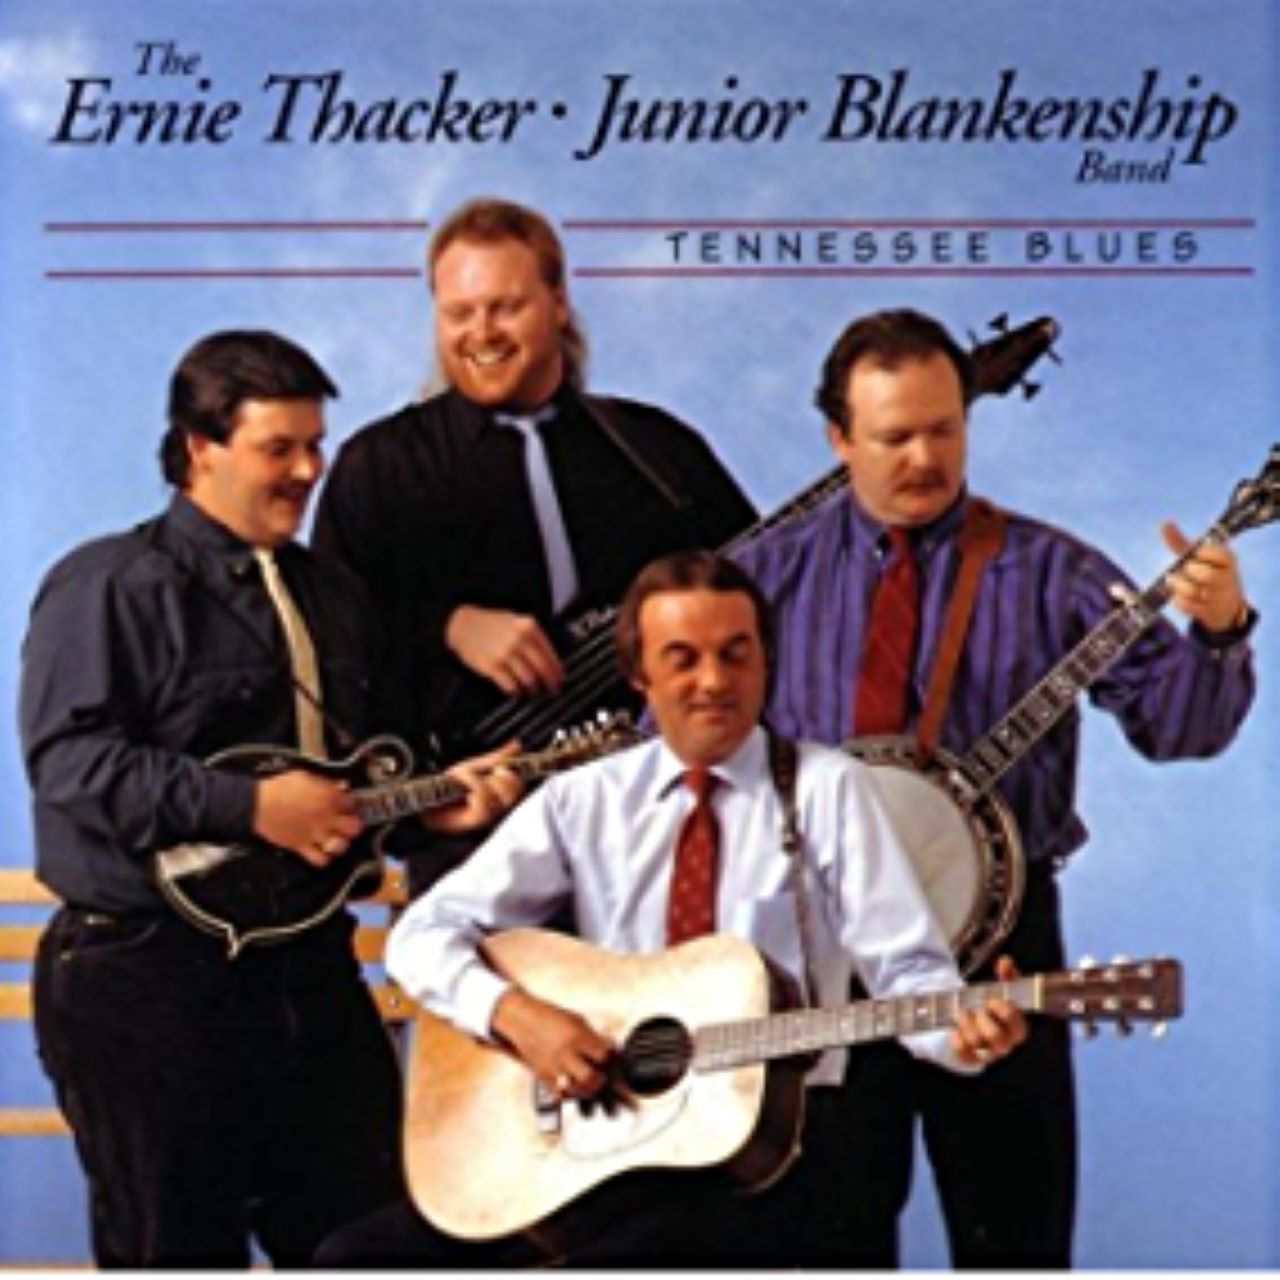 Ernie Thacker - Junior Blankenship Band - Tennessee Blues cover album